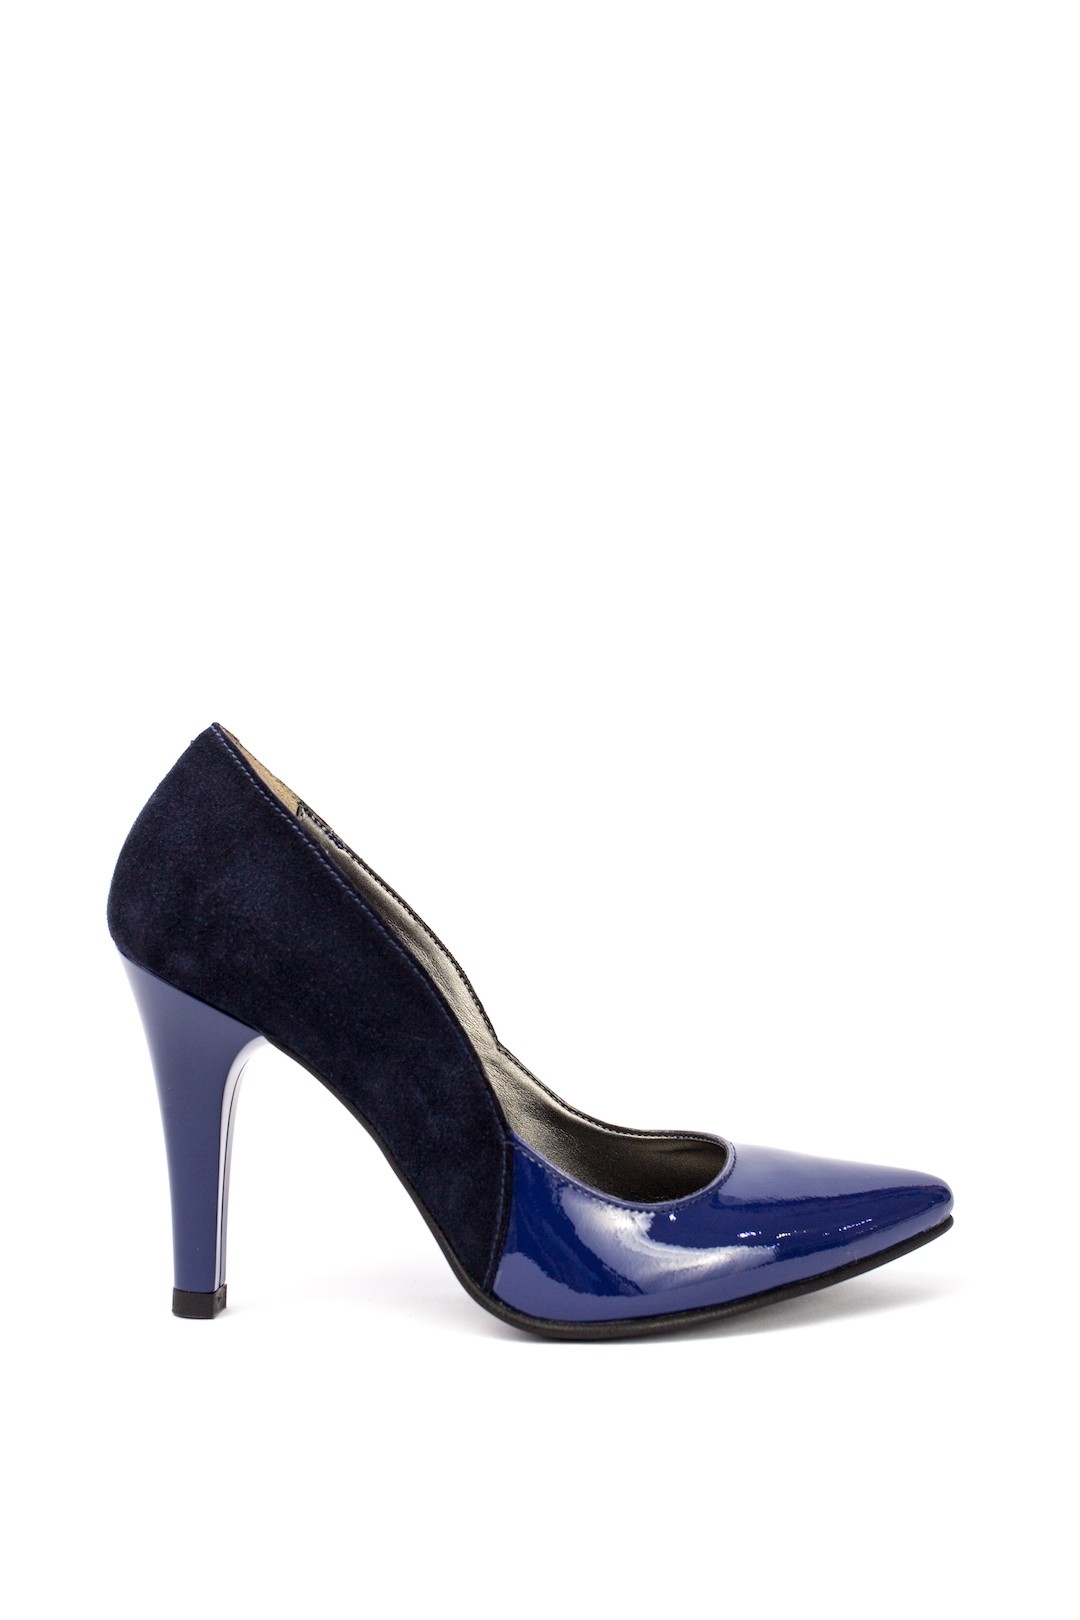 Pantofi Dama piele naturala albastru Cecilia